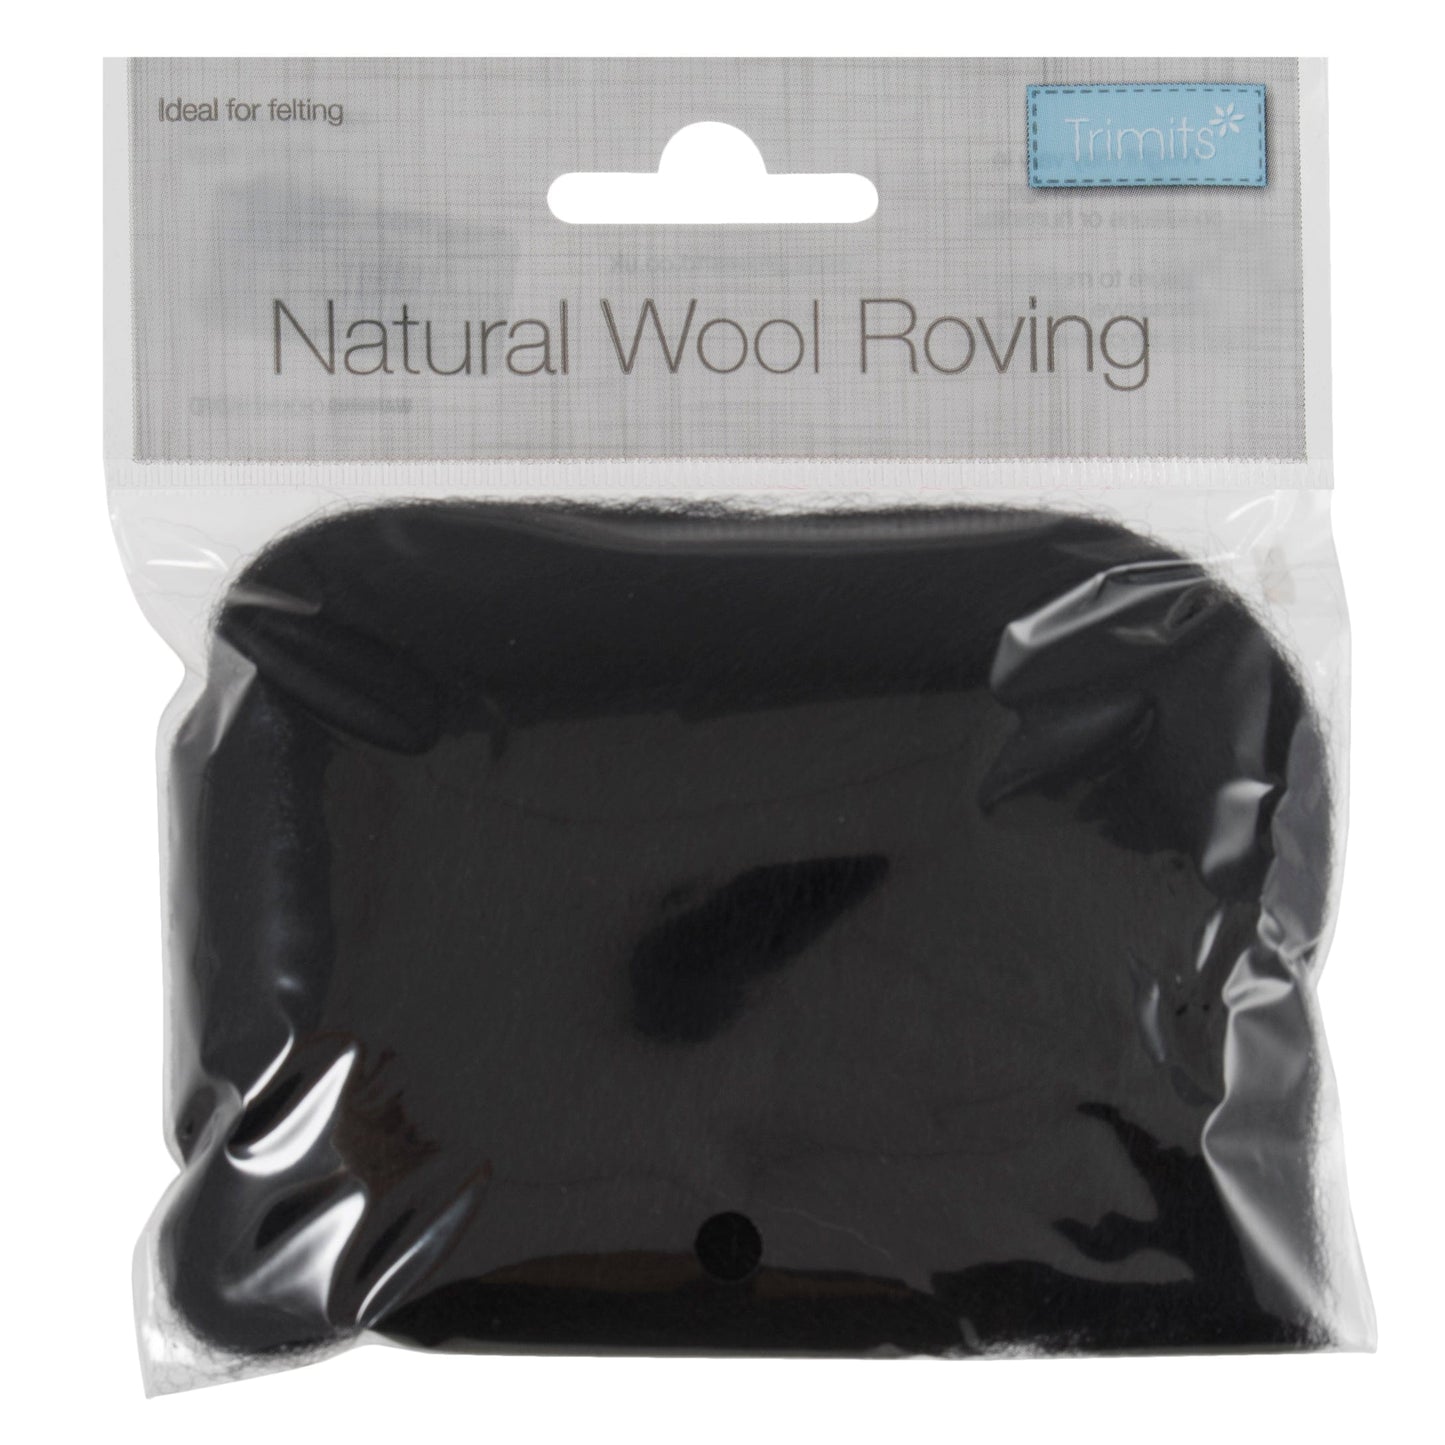 Natural Wool Roving, Black, 10g Packet